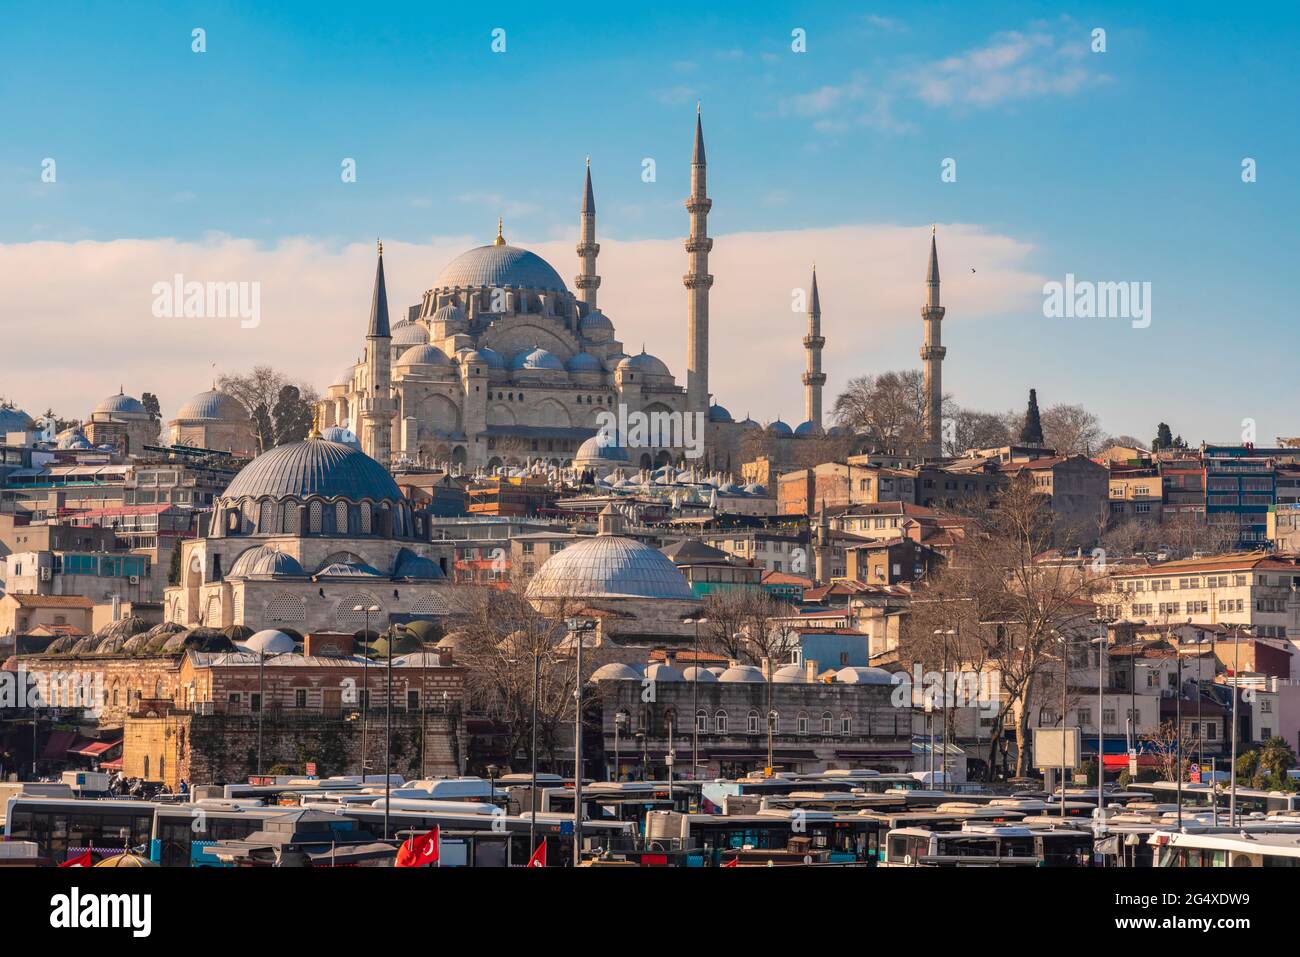 Turkey, Istanbul, Rustem Pasha Mosque, Suleymaniye Mosque and surrounding buildings Stock Photo